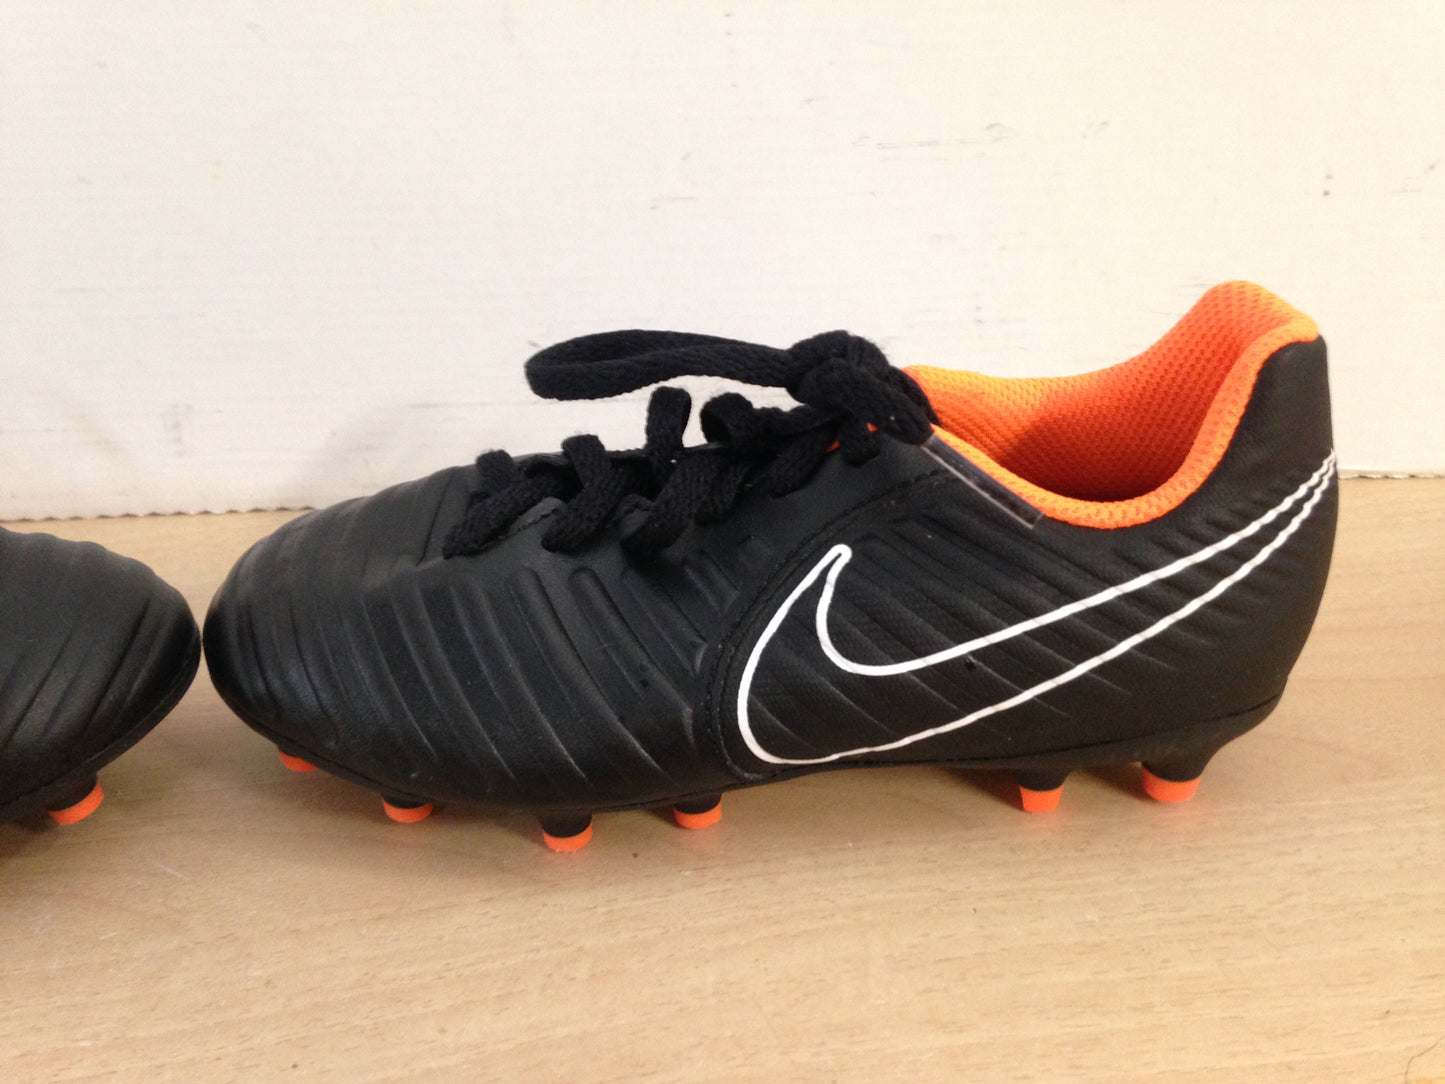 Soccer Shoes Cleats Child Size 11 Nike Tiempo Black Orange Excellent